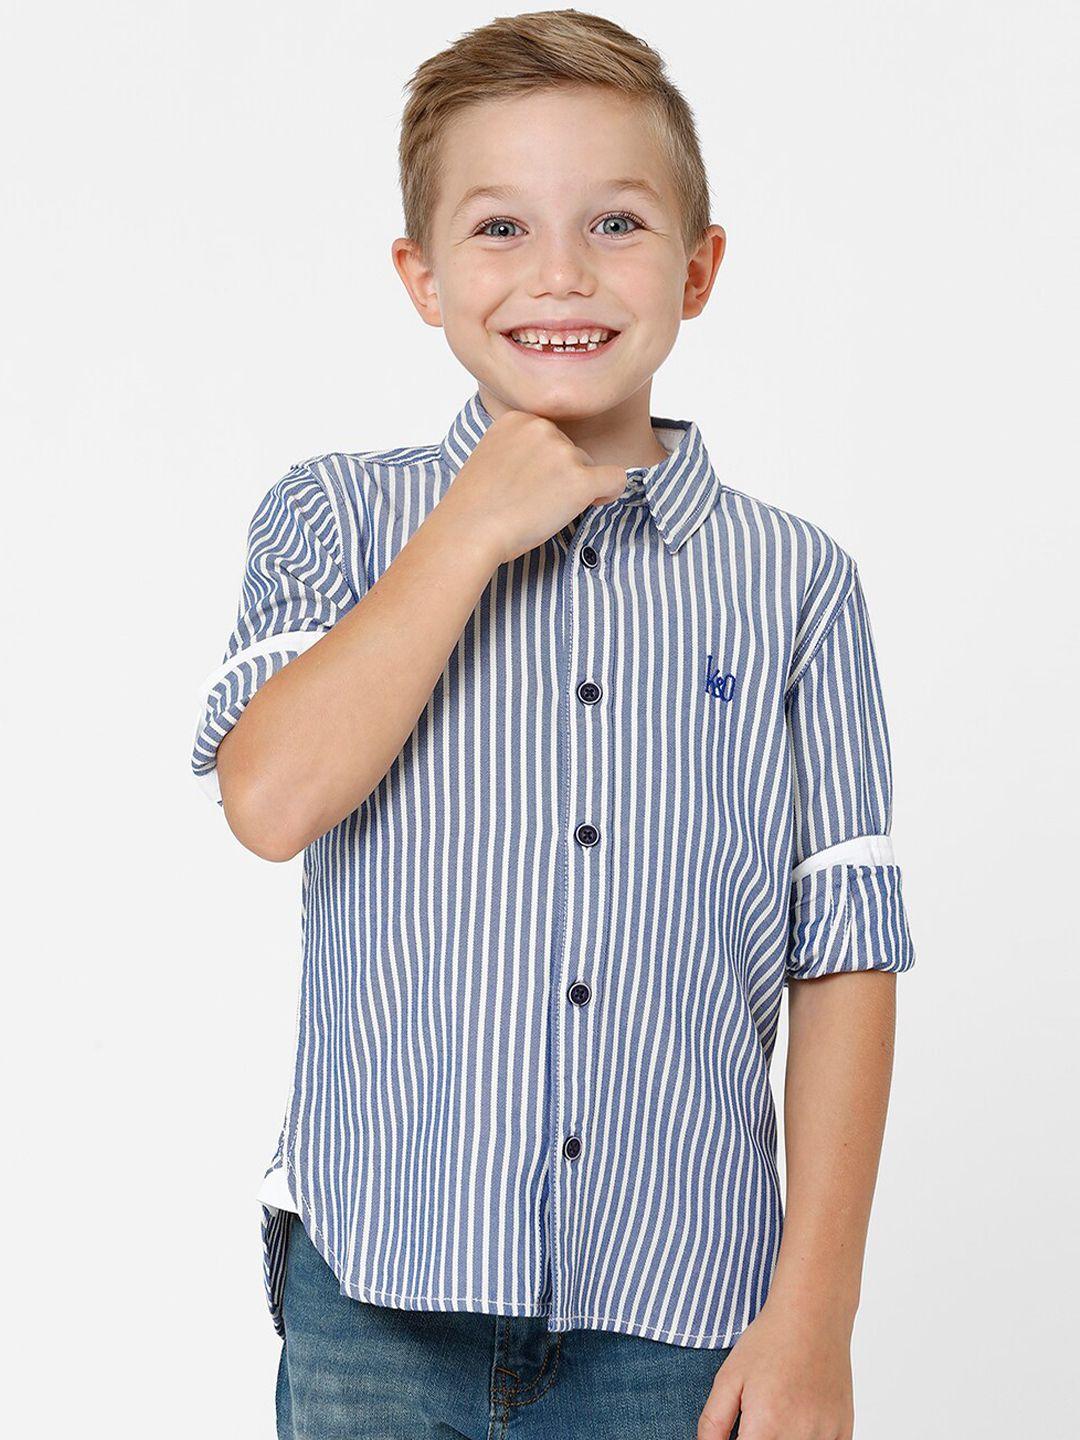 kate & oscar boys blue standard striped cotton casual shirt